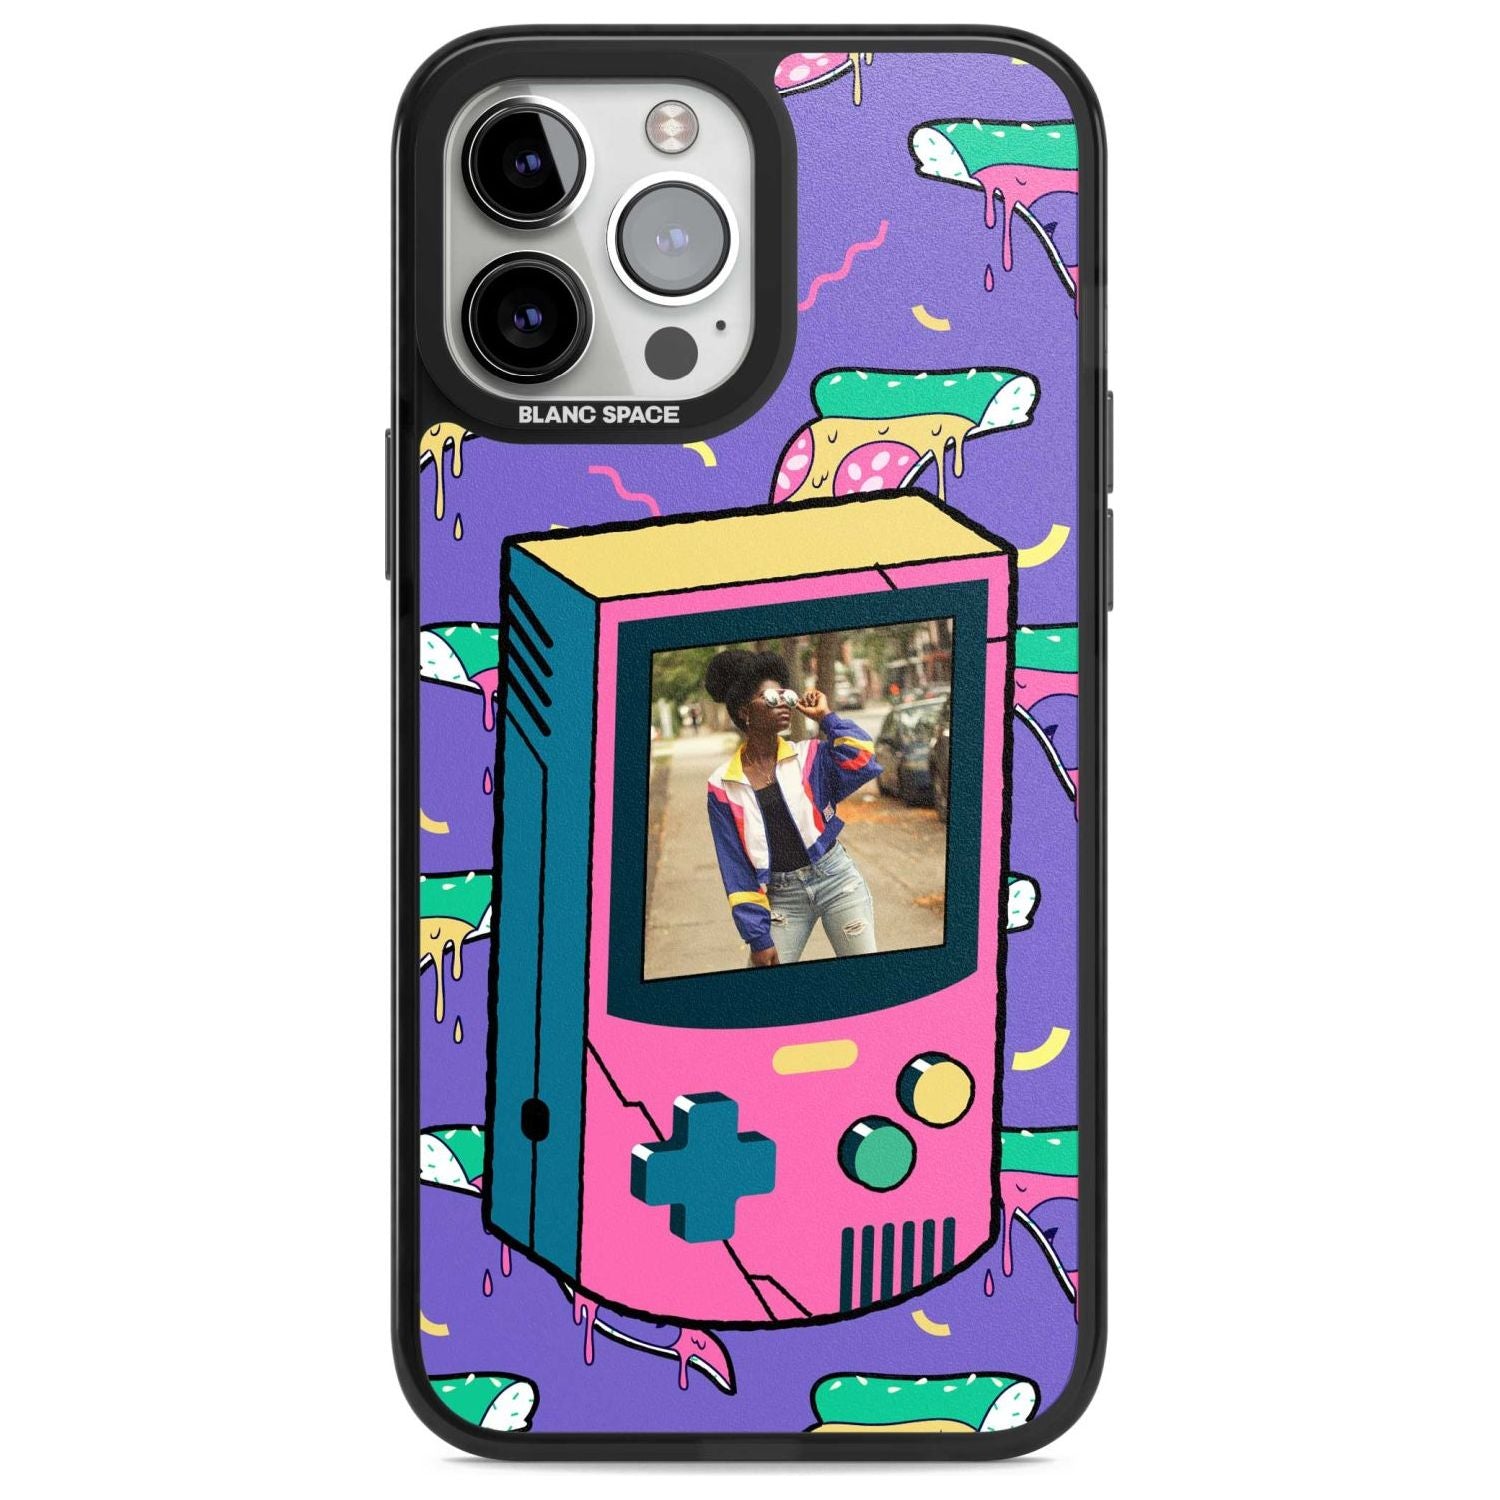 Personalised Retro Game Photo Case Custom Phone Case iPhone 13 Pro Max / Magsafe Black Impact Case Blanc Space